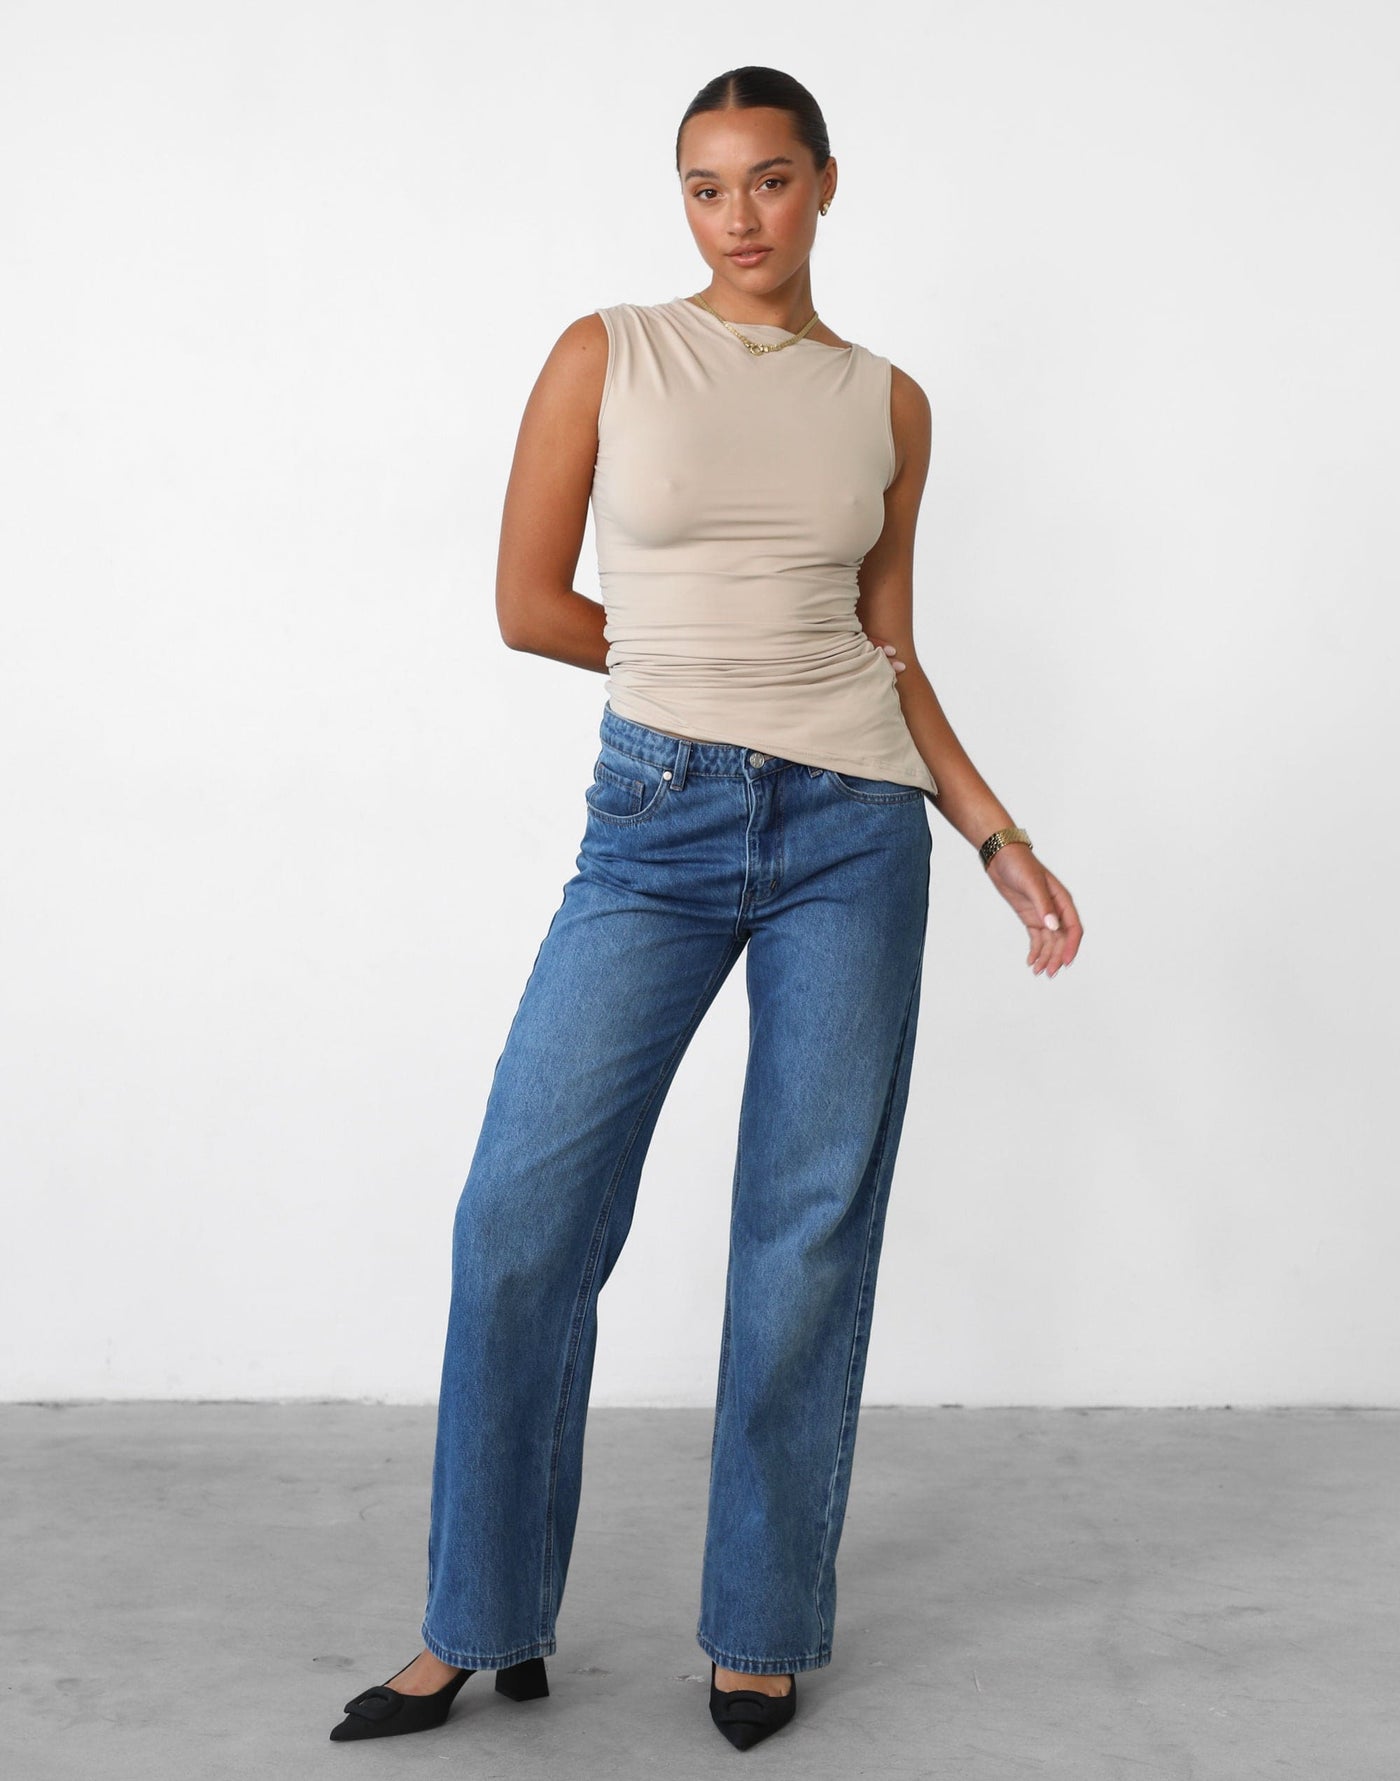 Daya Top (Beige) - Asymmetrical Hem Sleeveless Top - Women's Top - Charcoal Clothing